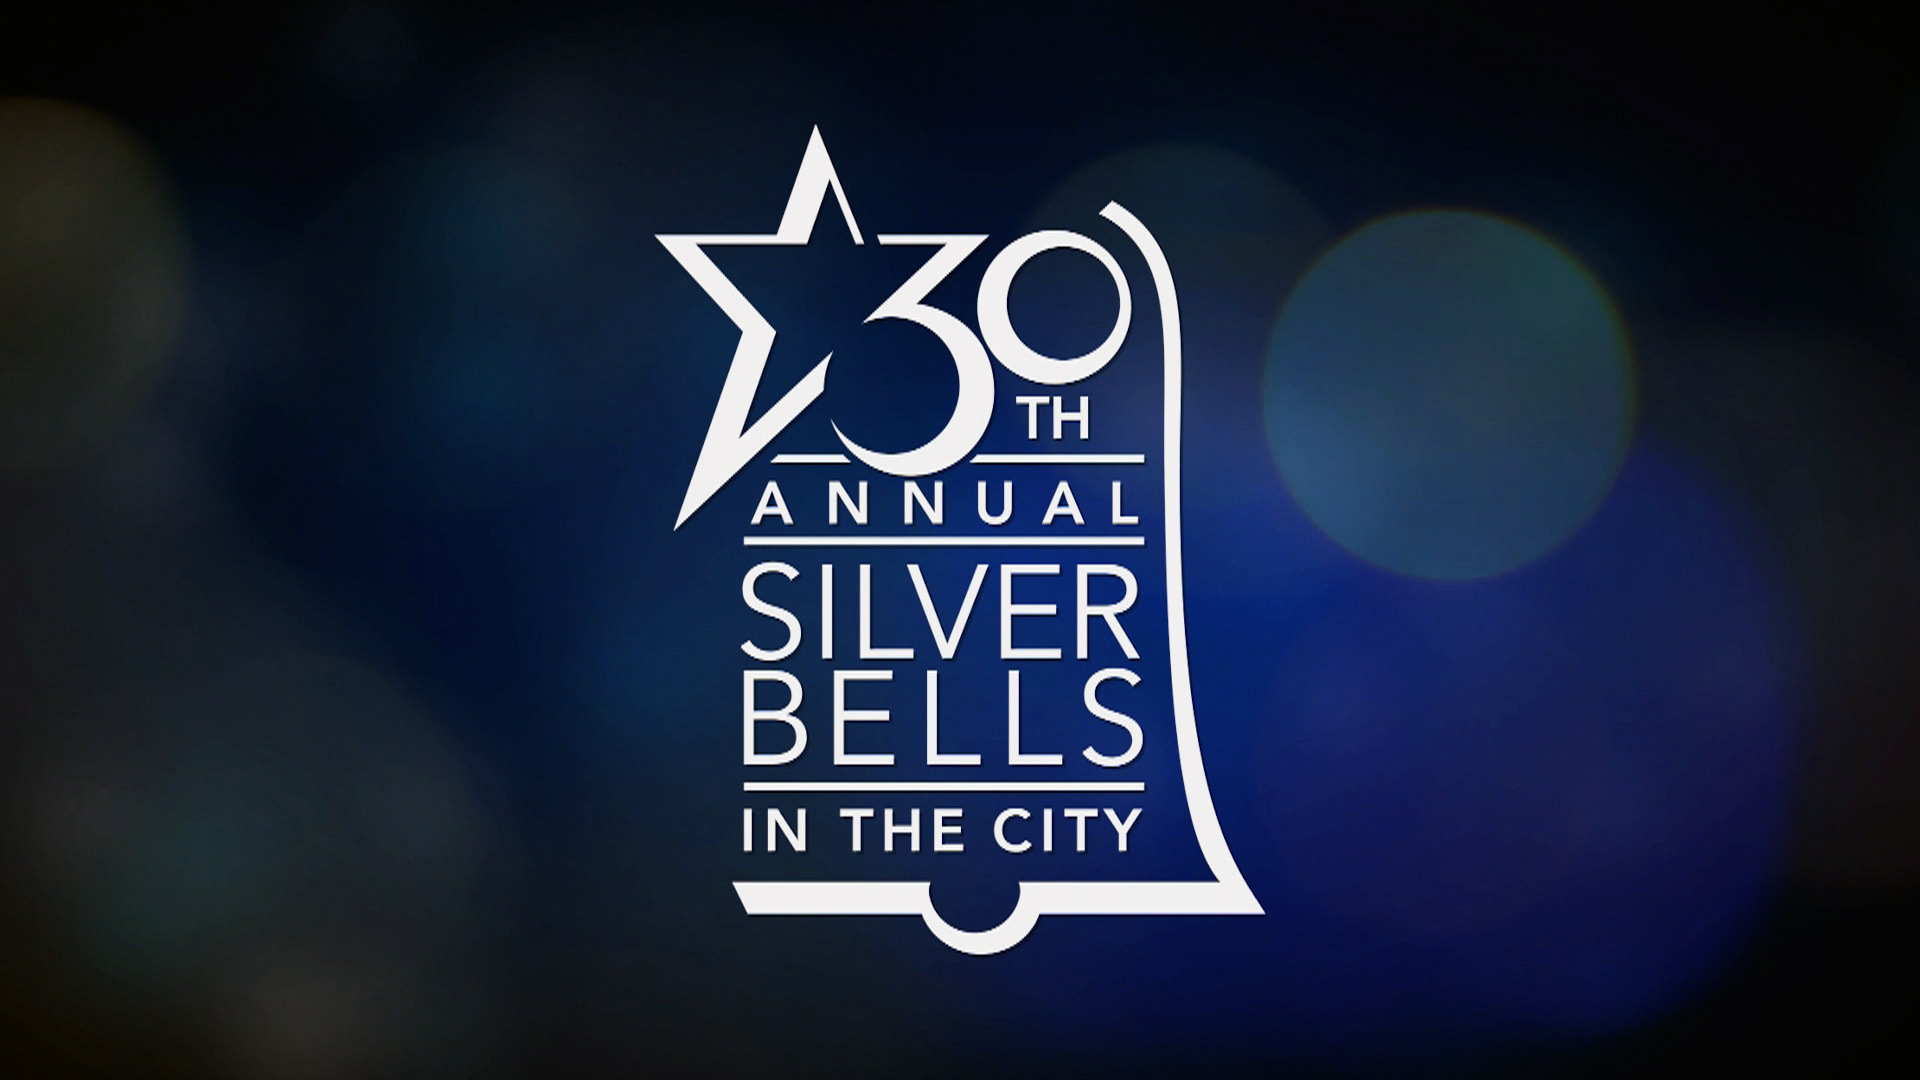 30th Annual Silver Bells in the City WKAR